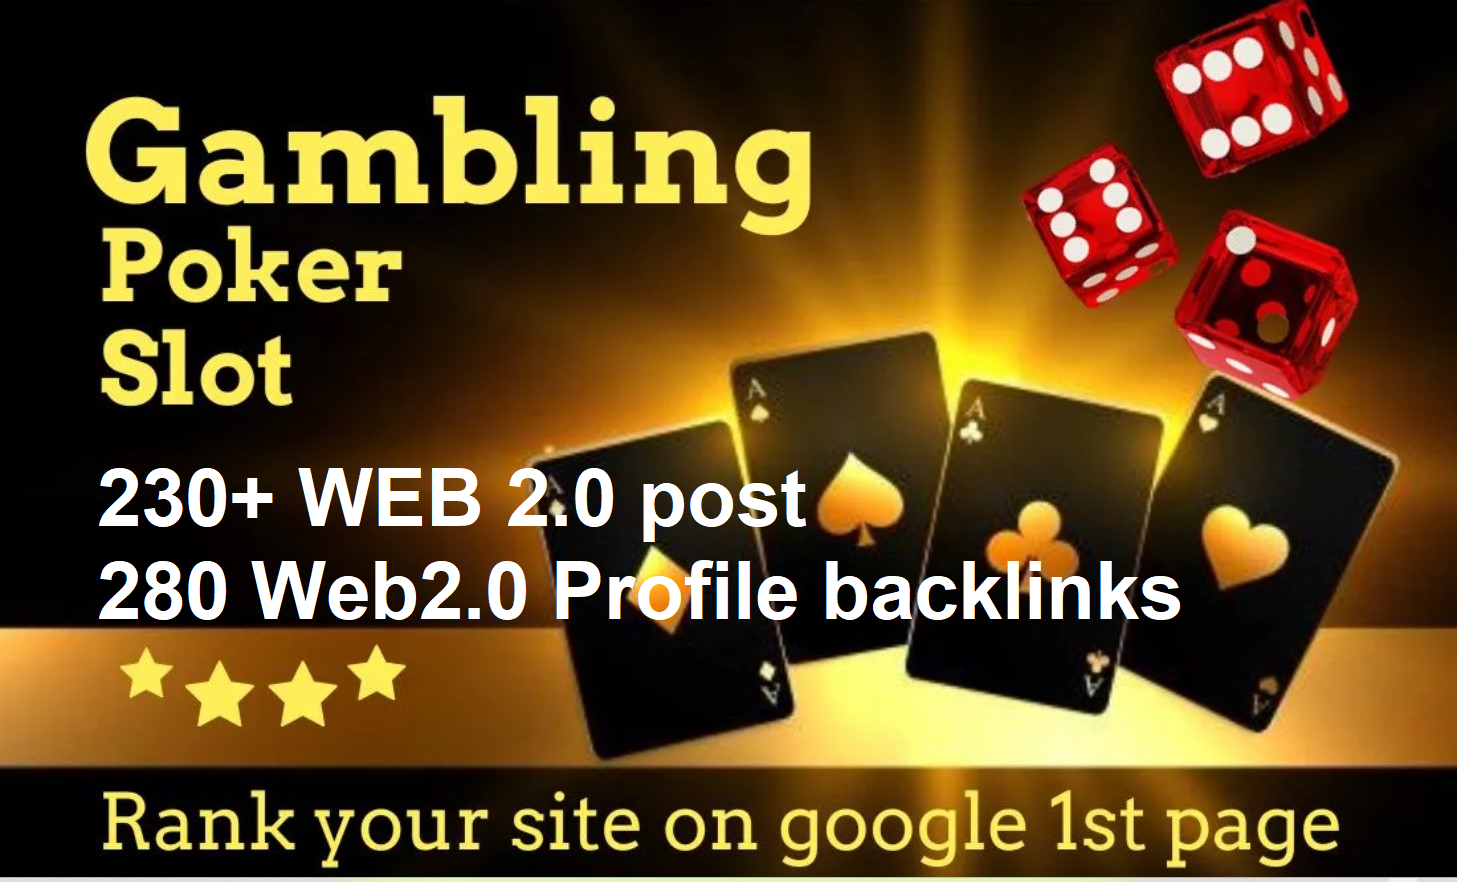 Get 230+ WEB 2.0 Post & 280 Web2.0 Profile backlinks High Quality & Permanent